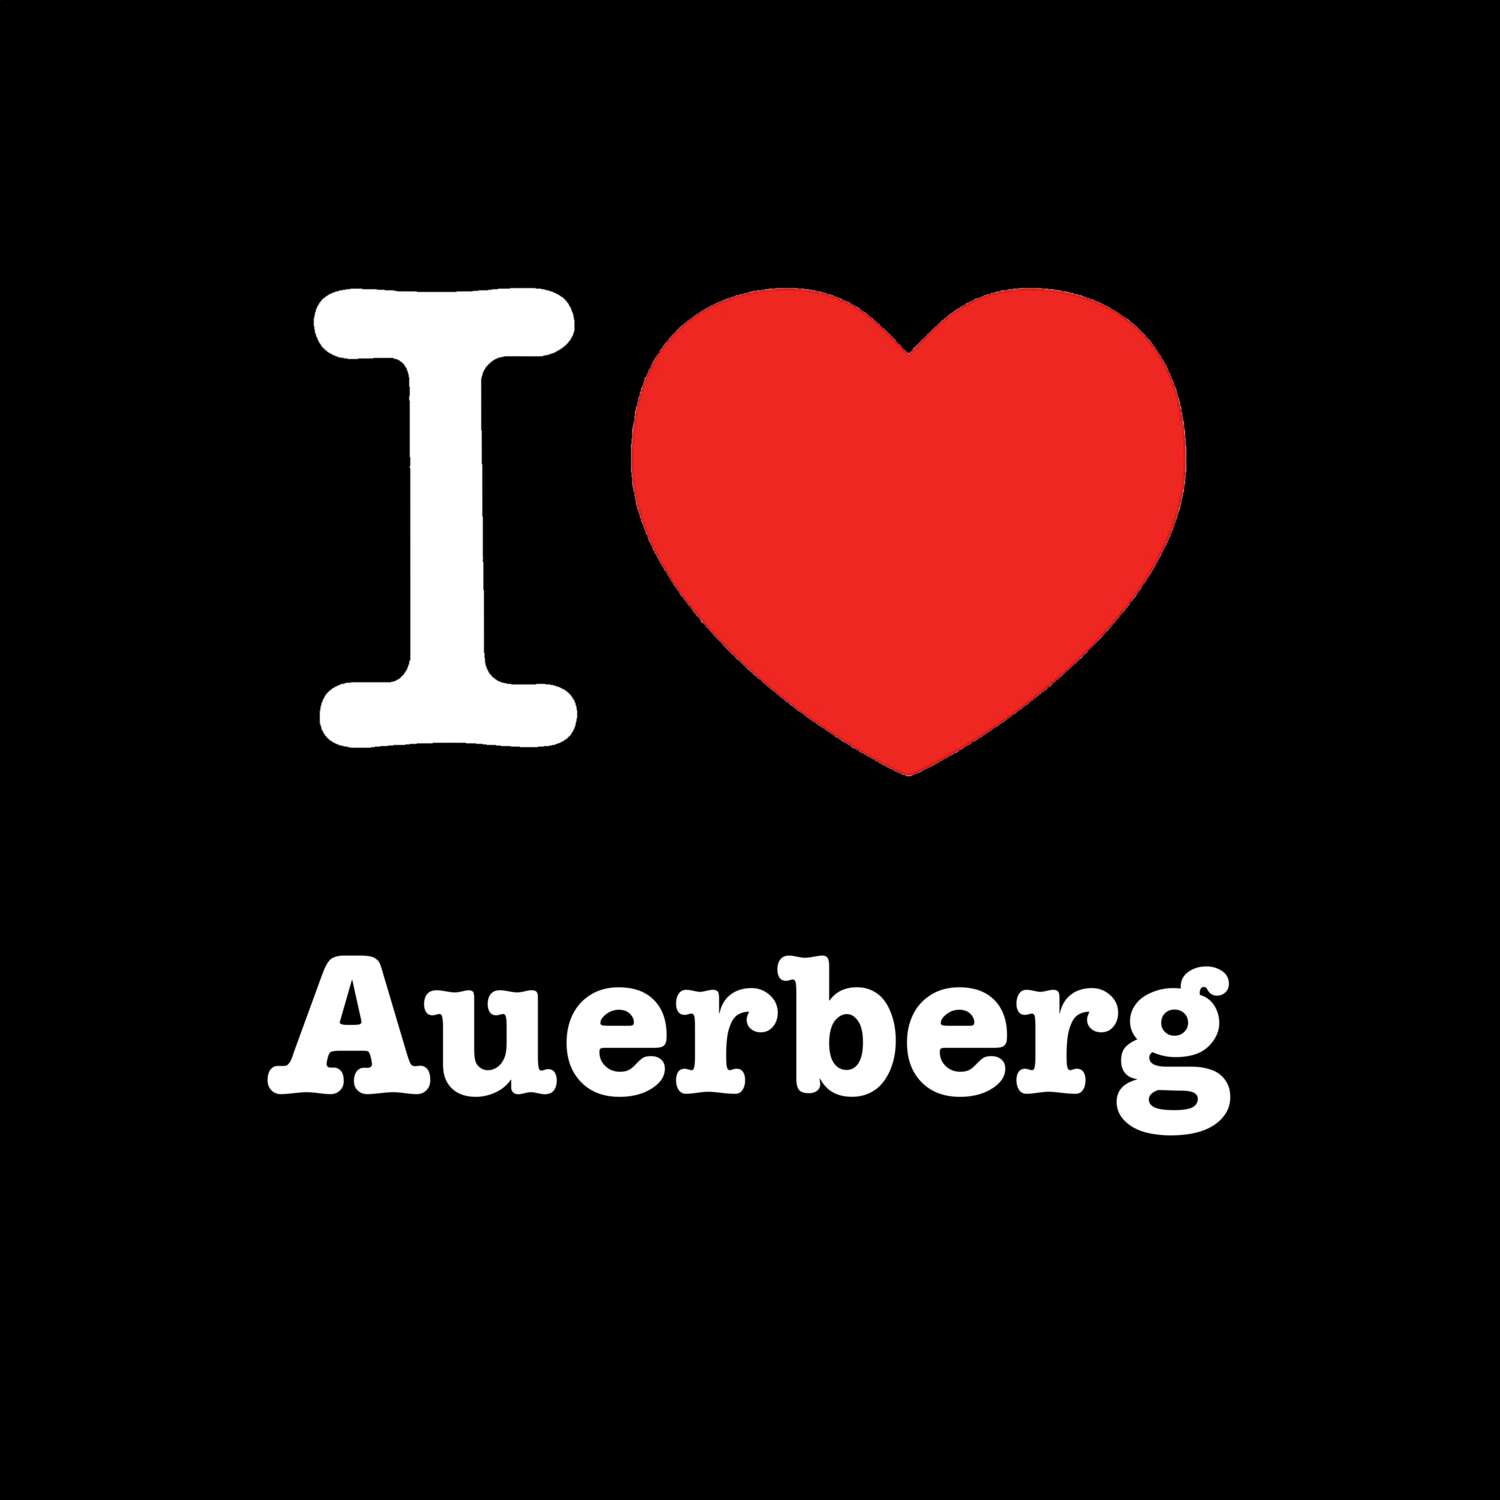 Auerberg T-Shirt »I love«